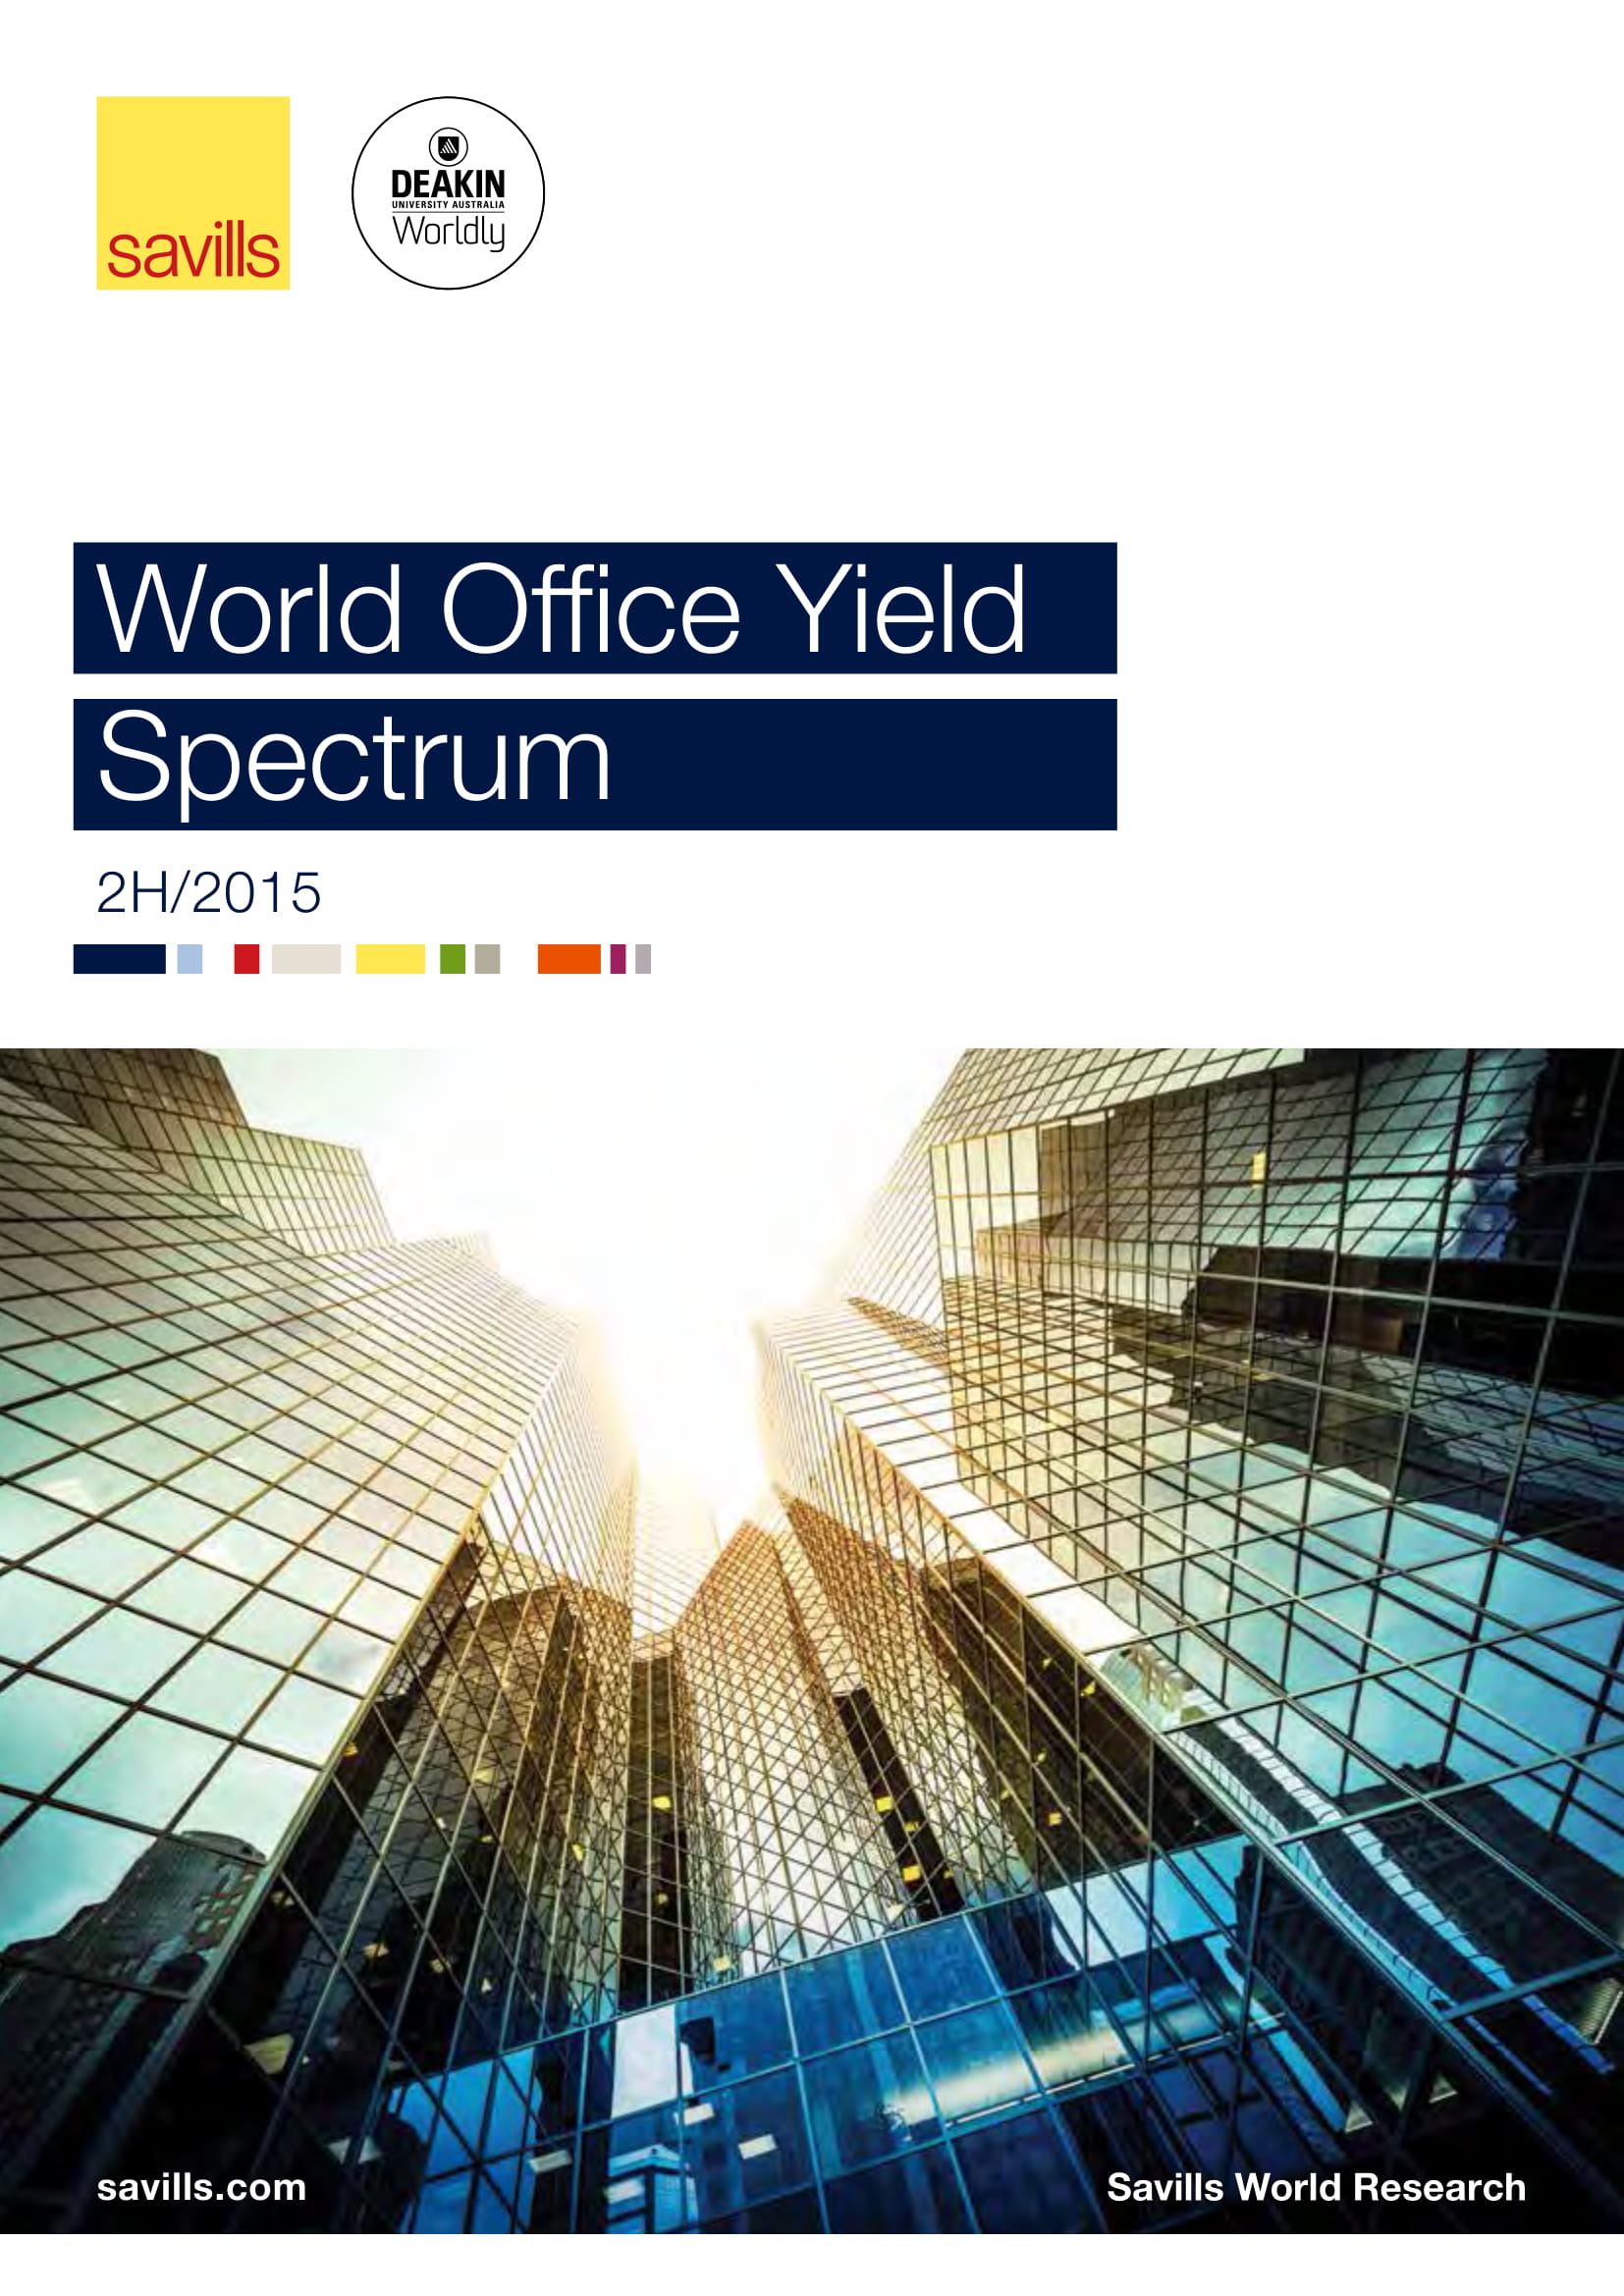 World Office Yield Spectrum 2H 2015